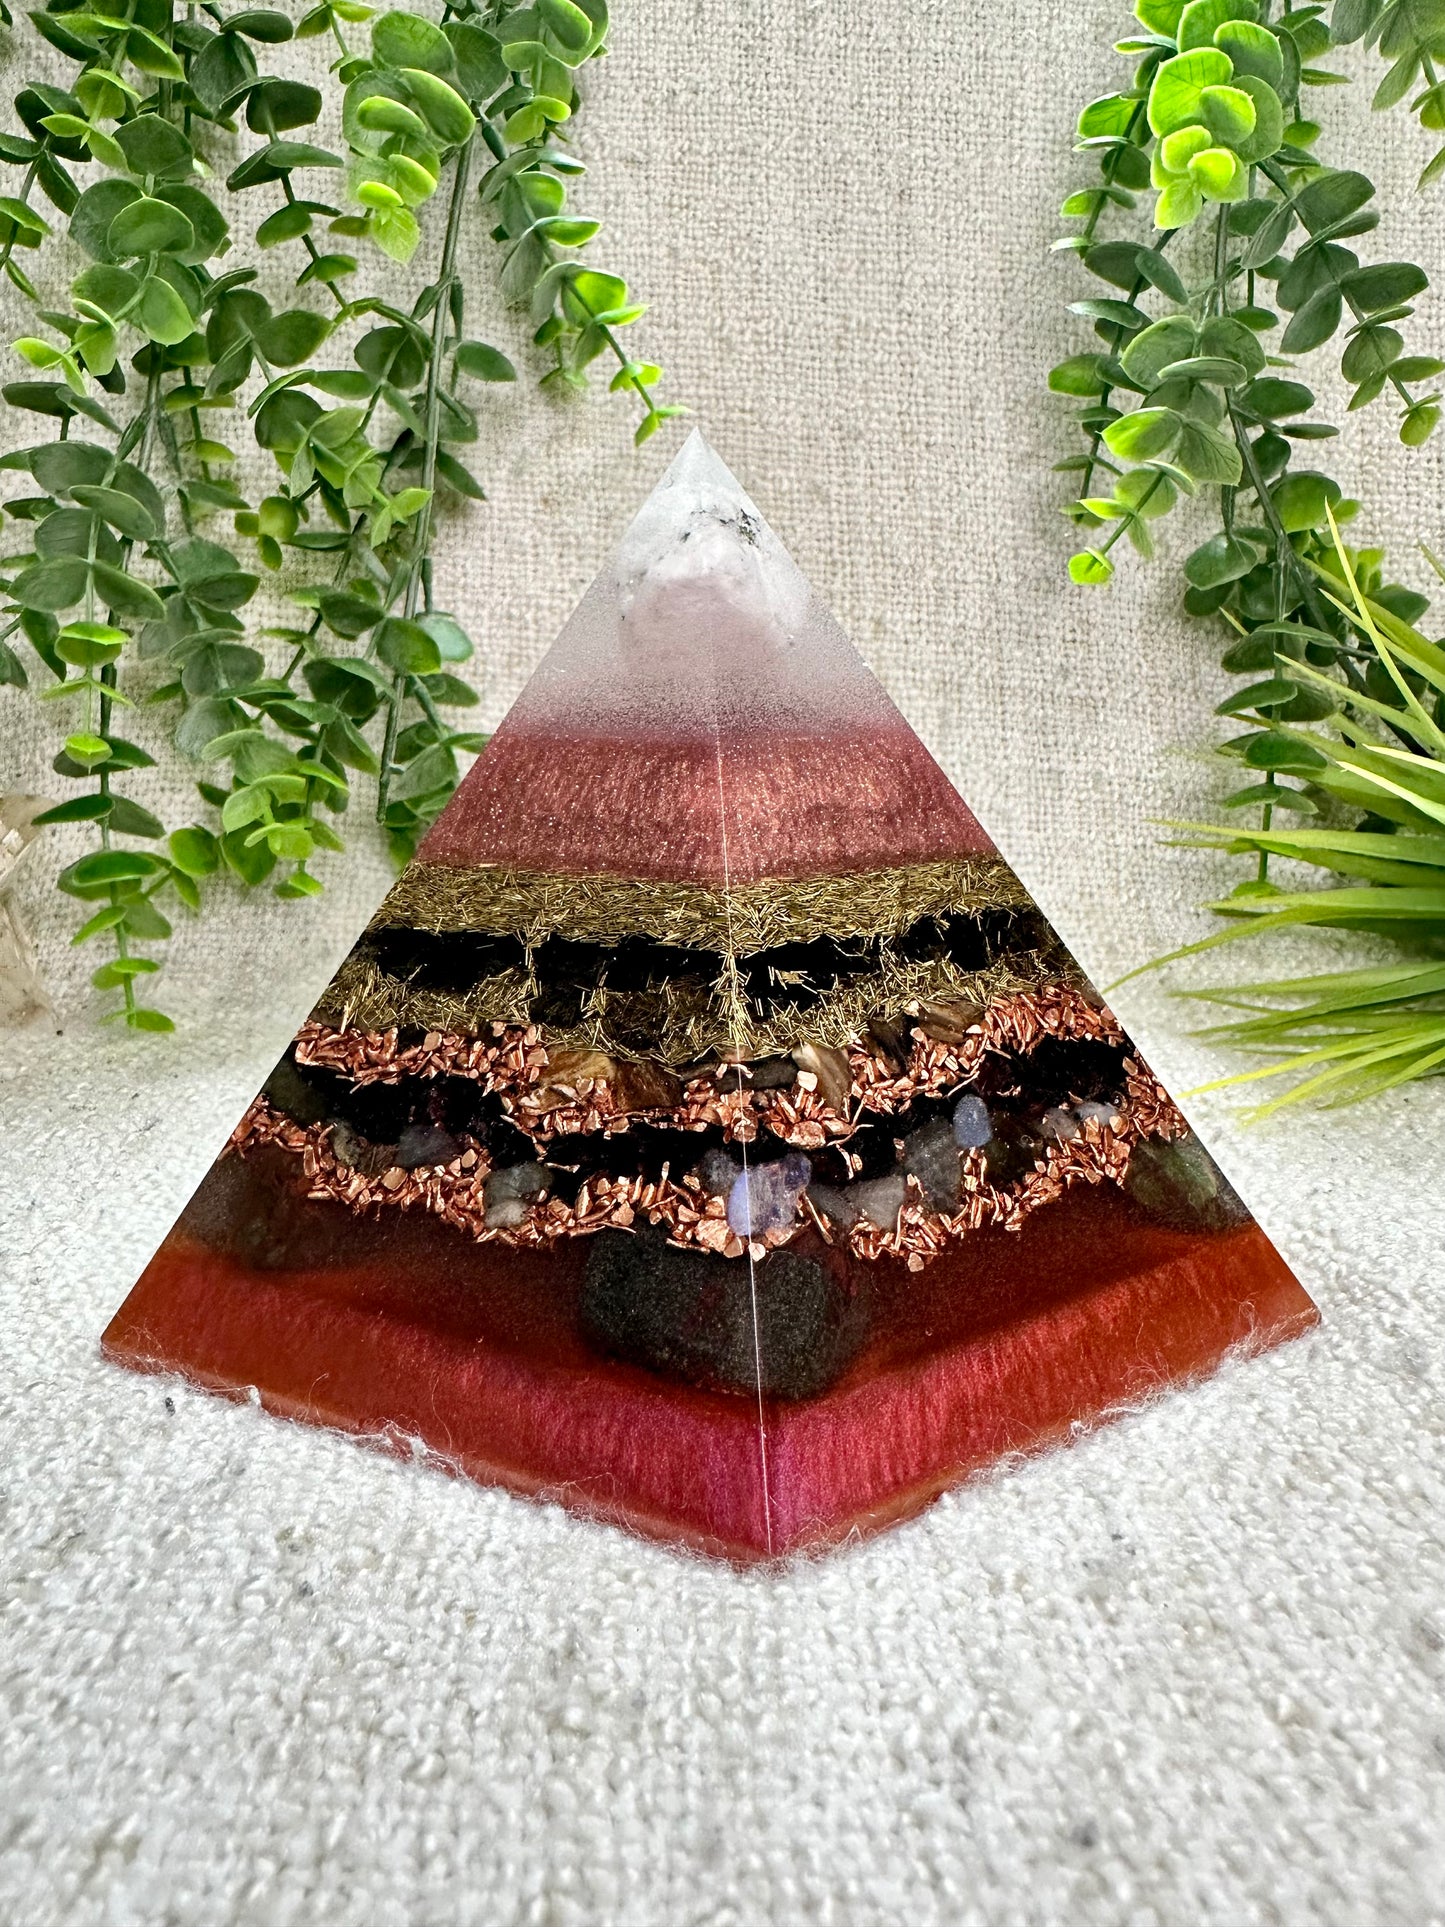 FALL EQUINOX - Special Edition Hexagonal Pyramid! - EMF Protector - Moonstone, Smoky Quartz, Garnet, Labradorite, Dragon Blood Jasper, with Brass and Copper Metals